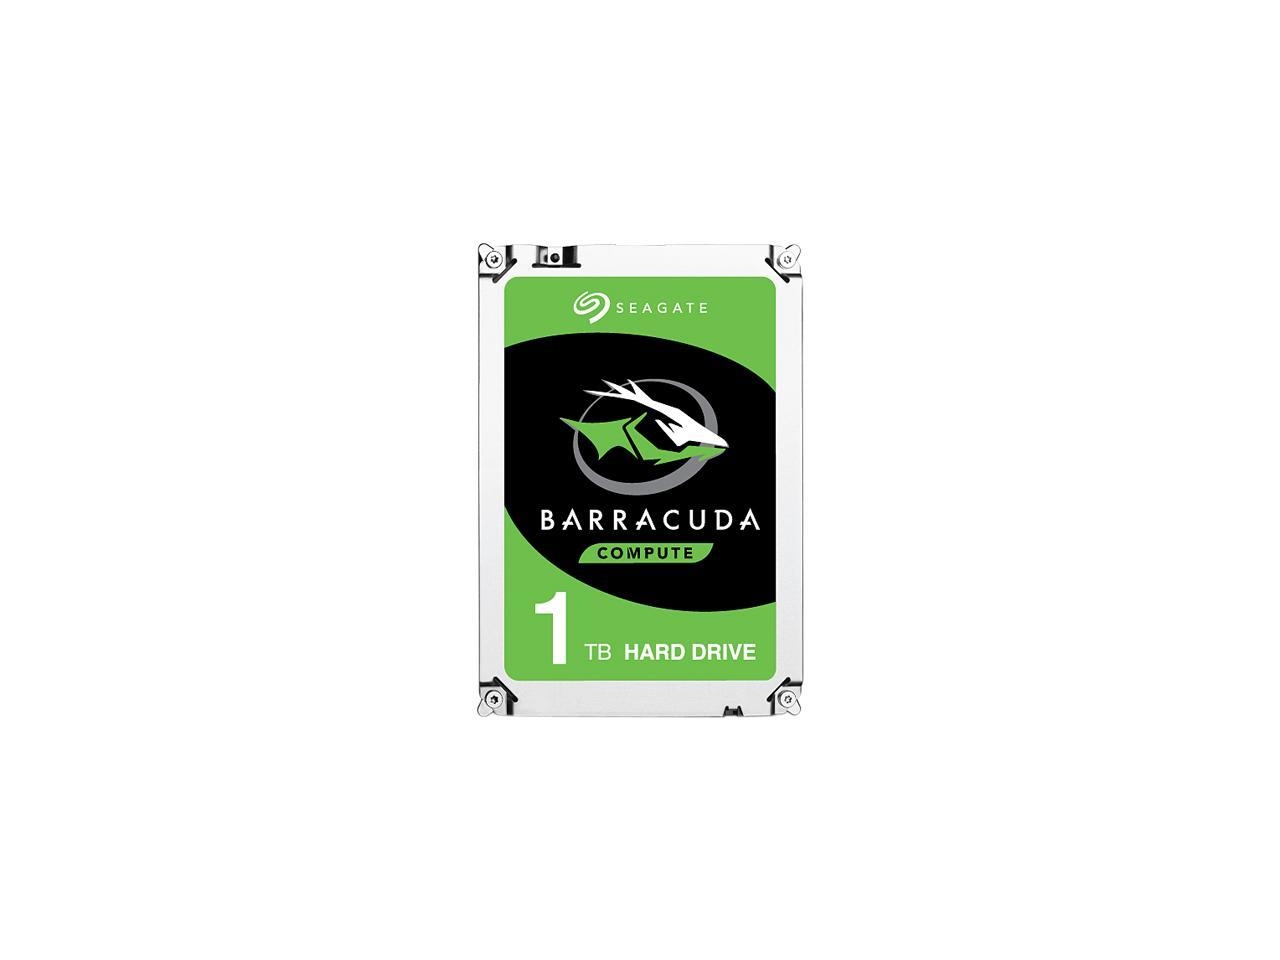 SEAGATE BARRACUDA 1TB 128MB 7MM SATA 2.5' NOTEBOOK HDD (ST1000LM048)